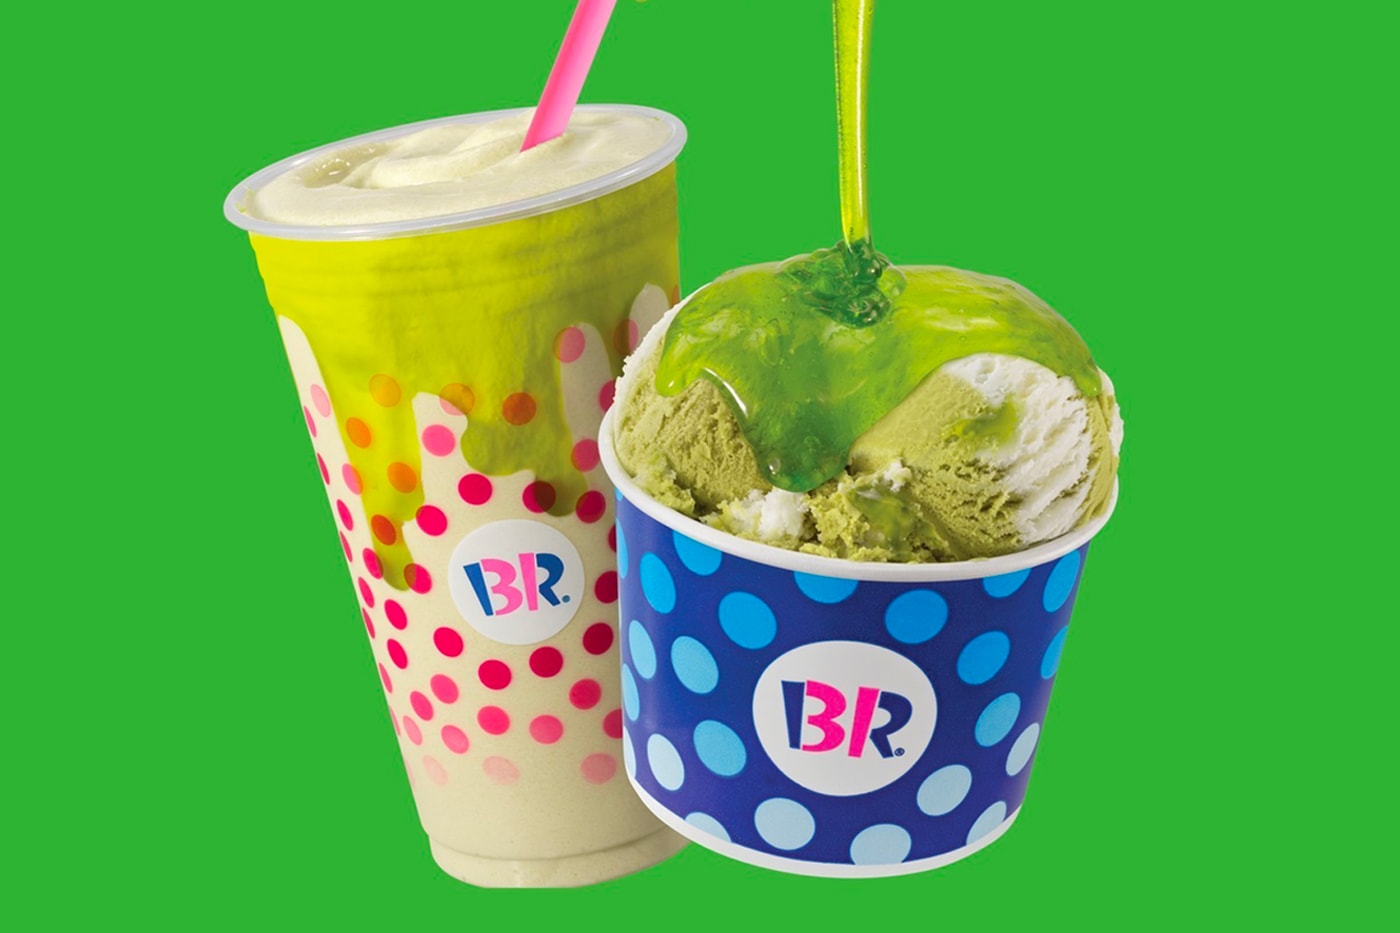 Baskin Robbins New Slime Summer Ice Cream Topping "Sour Berry Slime" "Summertime Lime"